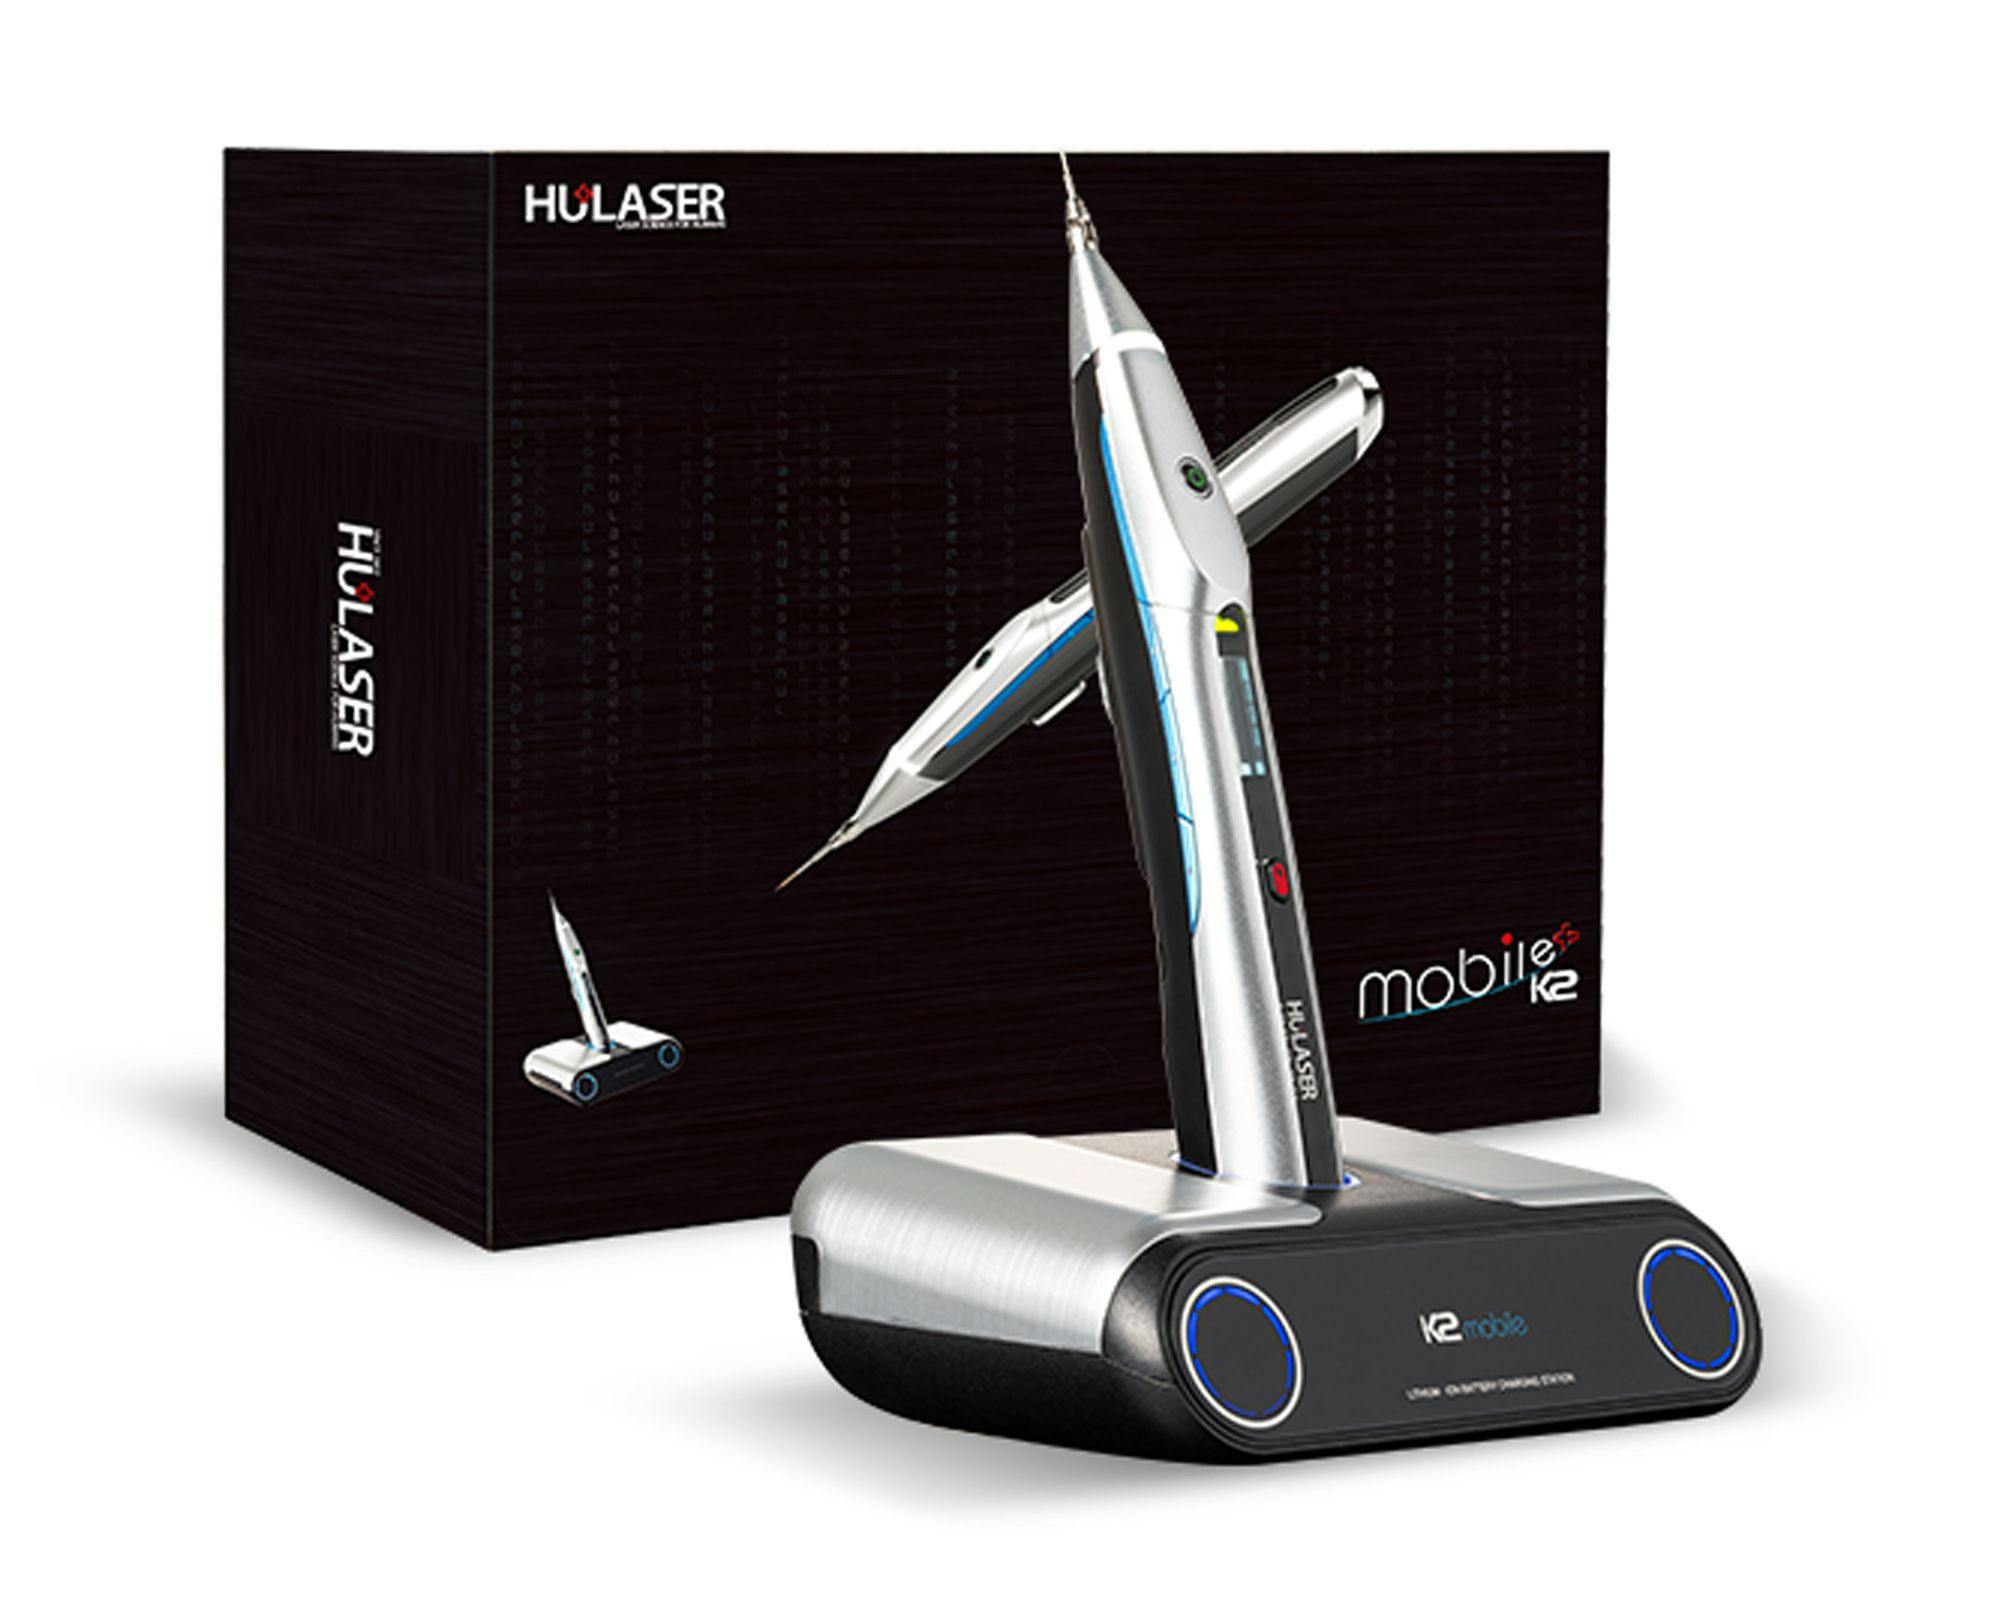 Polaroid HealthCare Announces Distribution of HuLaser K2 Mobile Cordless Diode Laser